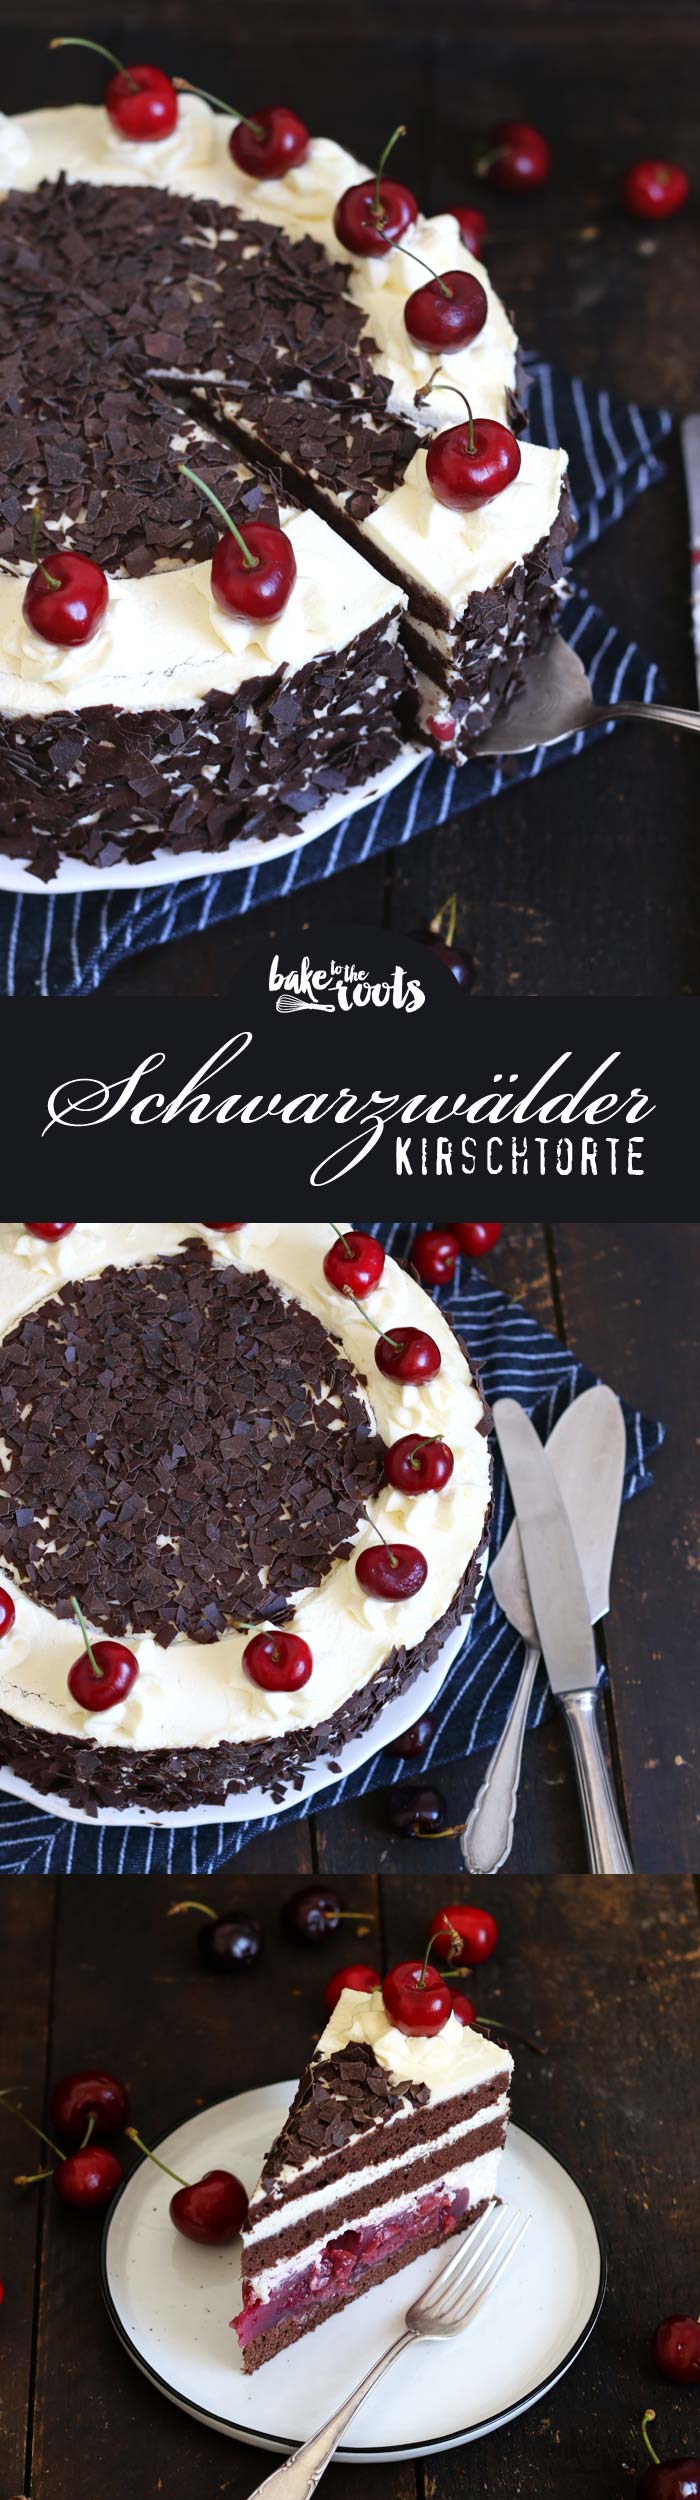 Delicious Black Forest Cake aka. Schwarzwälder Kirschtorte | Bake to the roots